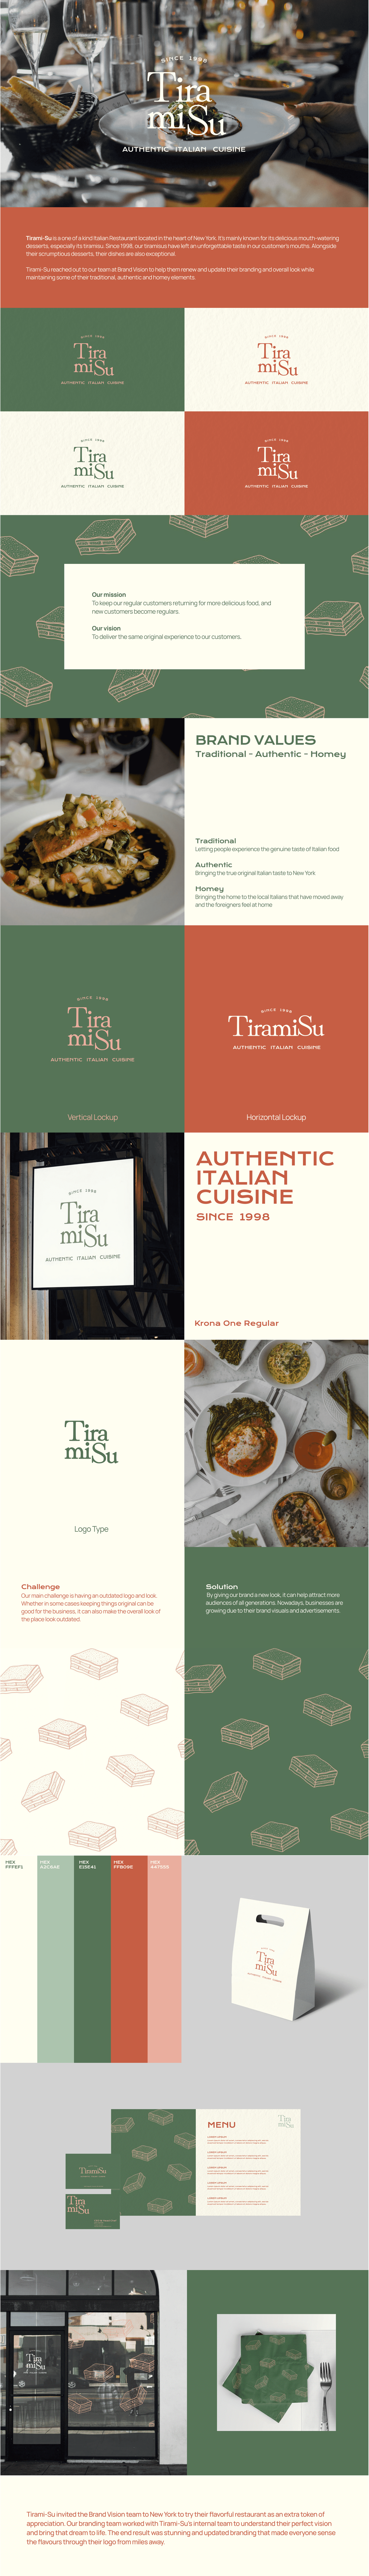 Delightful Branding - TiramiSu Italian Restaurant by Brand Vision Marketing.